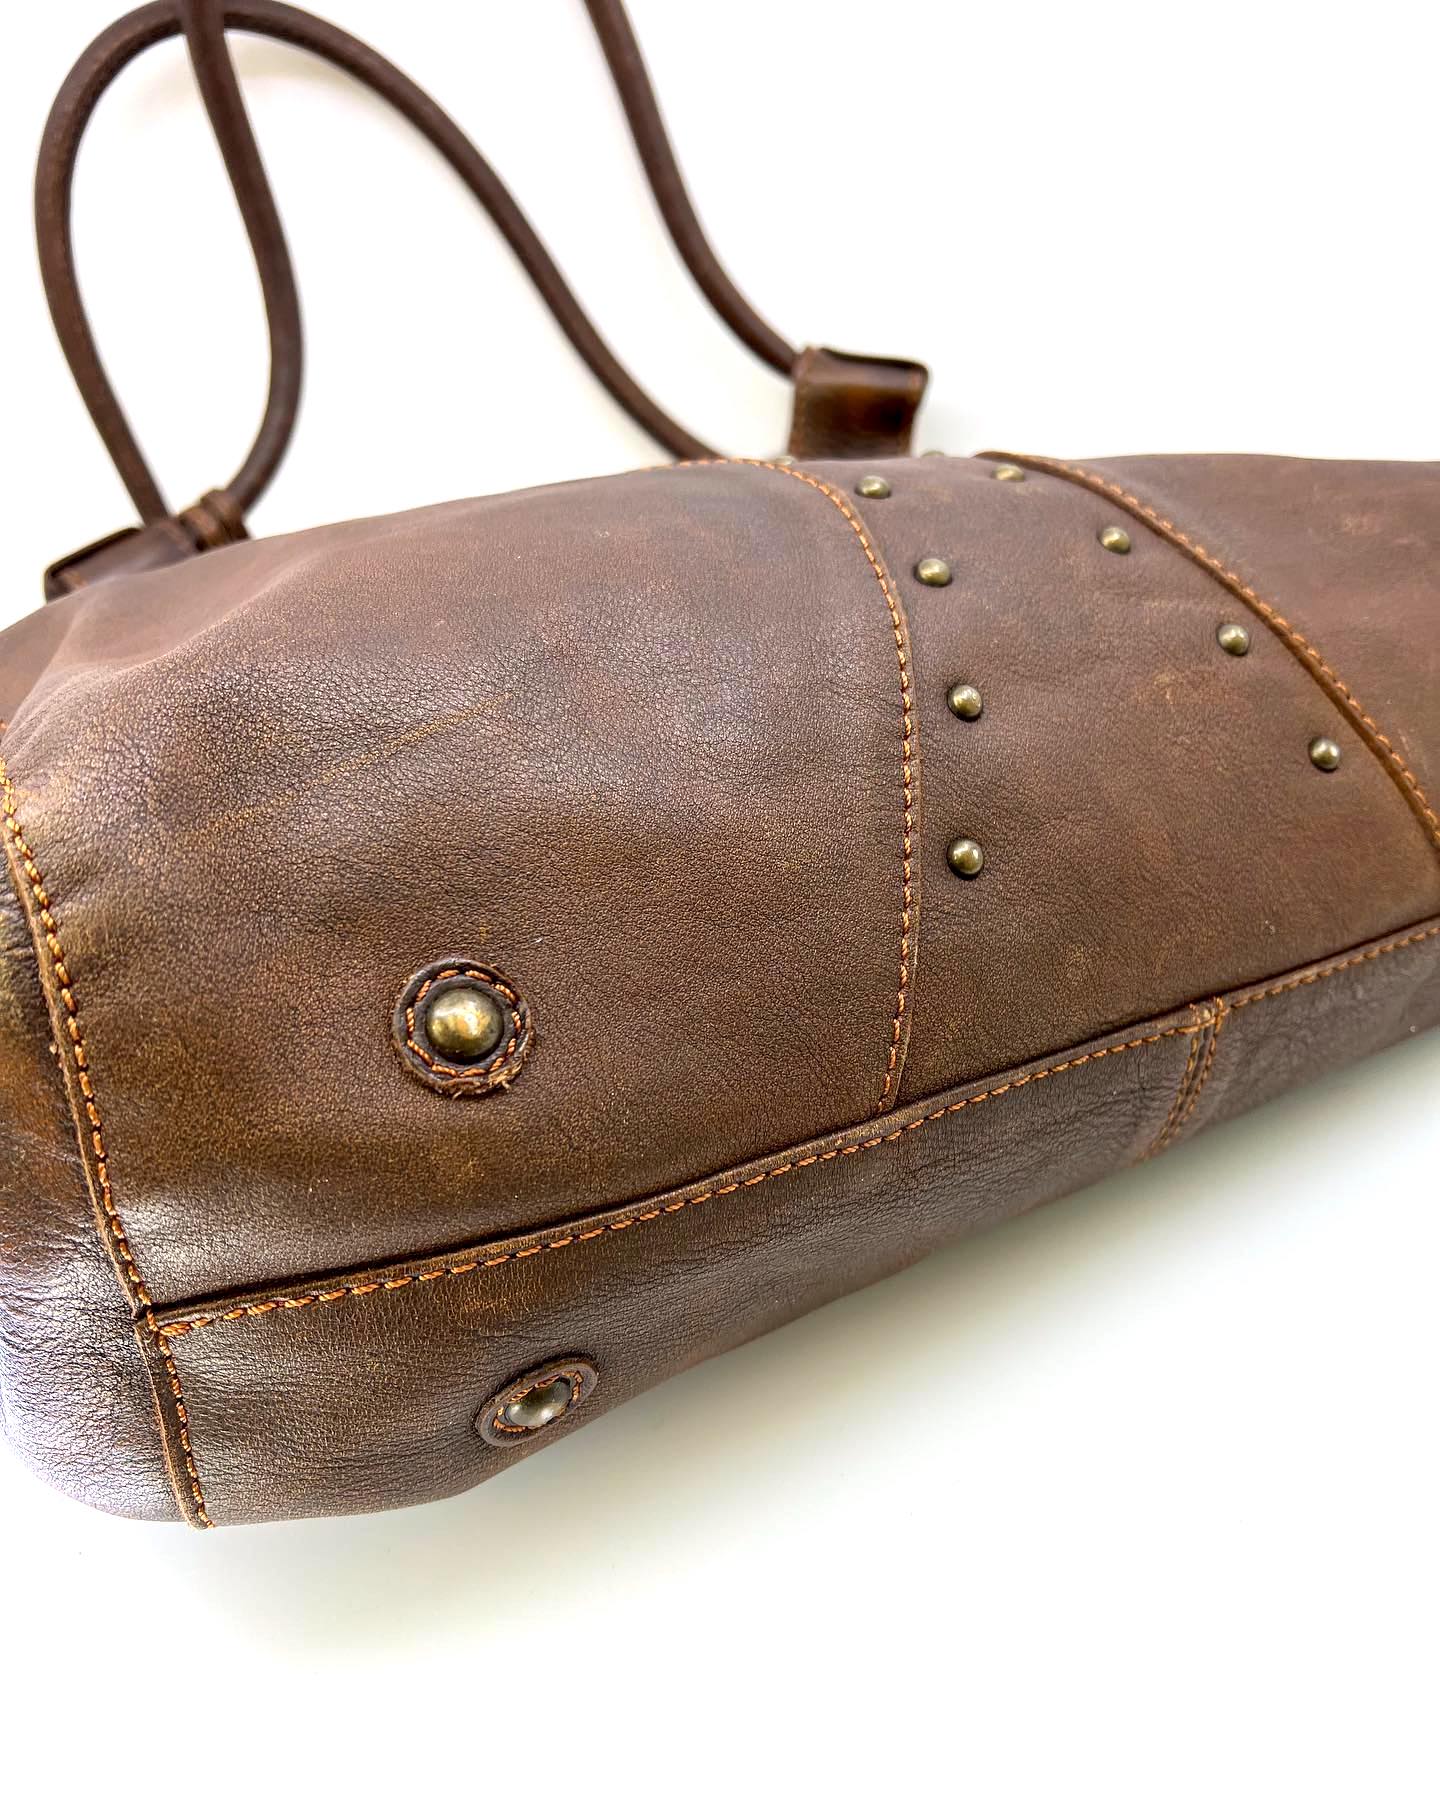 Frye Genuine Leather Handbags | Mercari